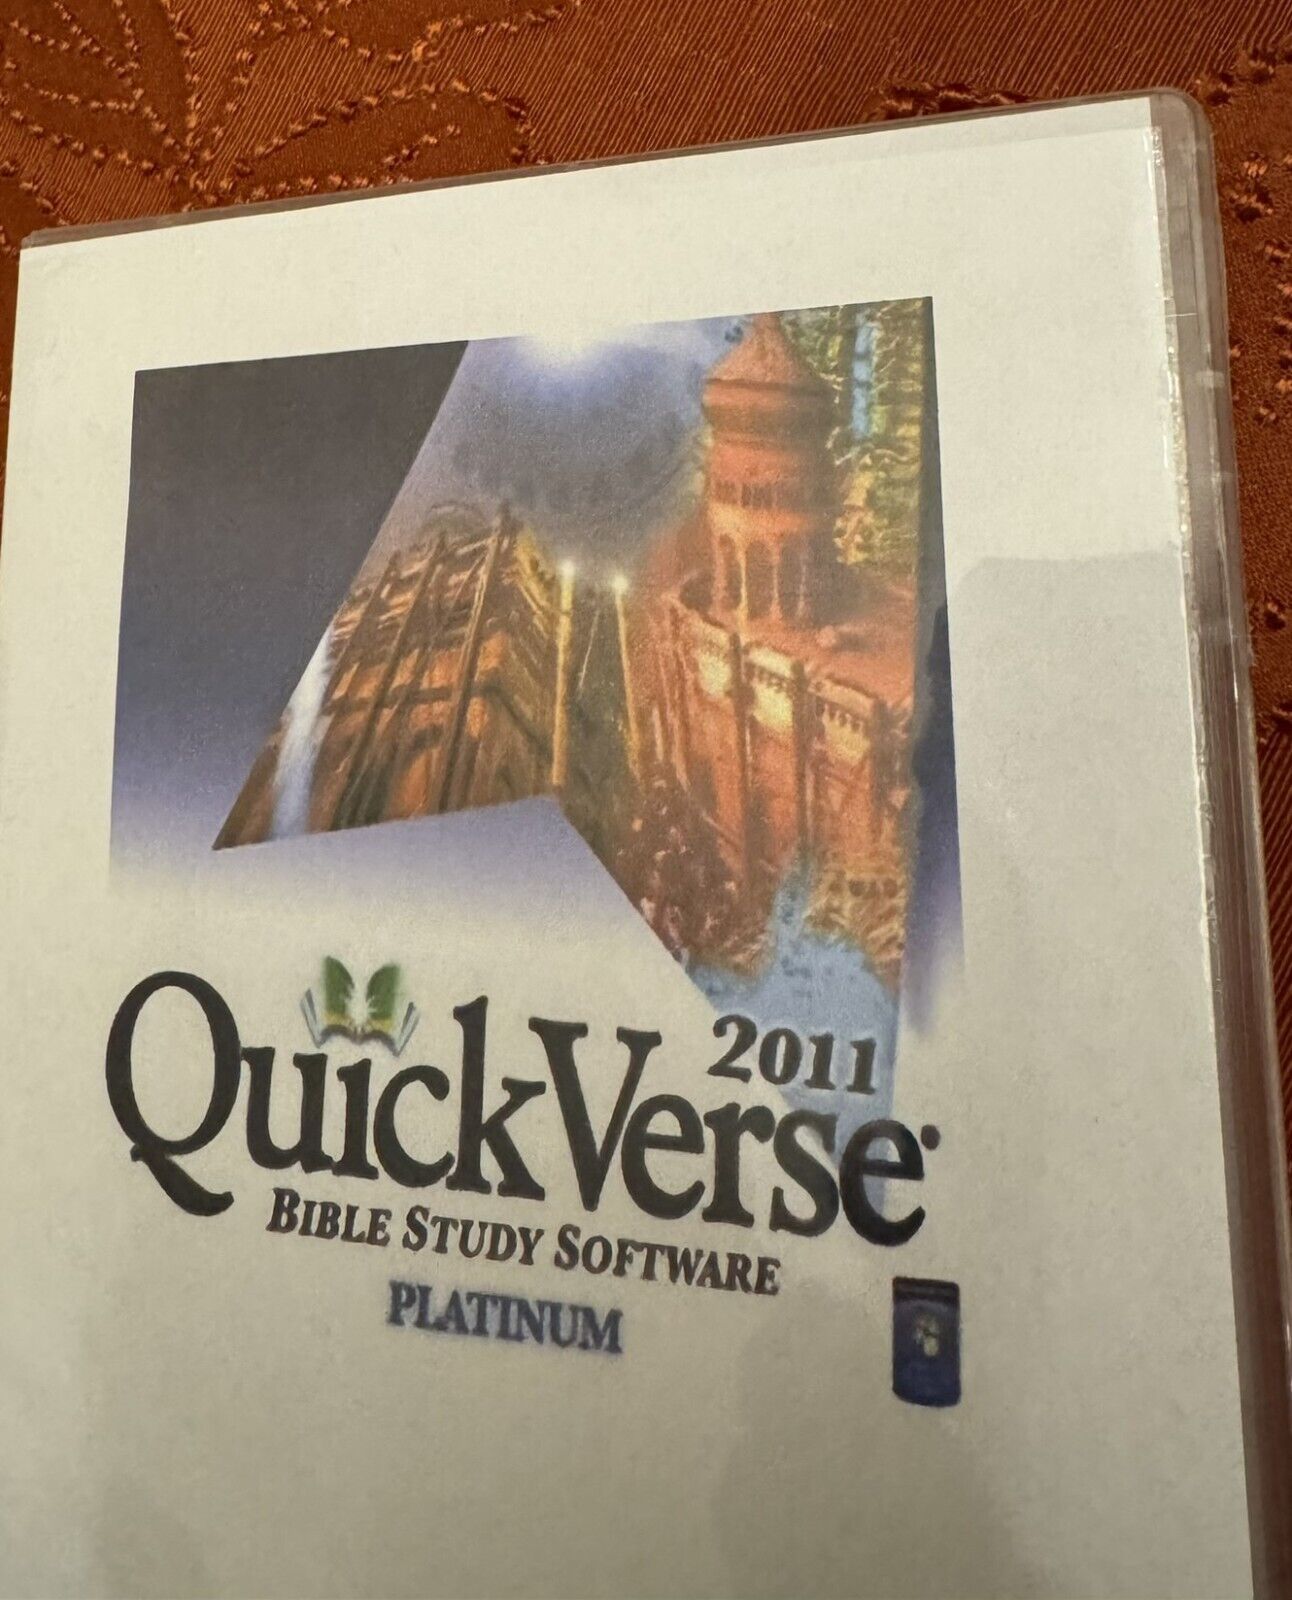 QuickVerse 2011 Platinum Bible Software for Windows